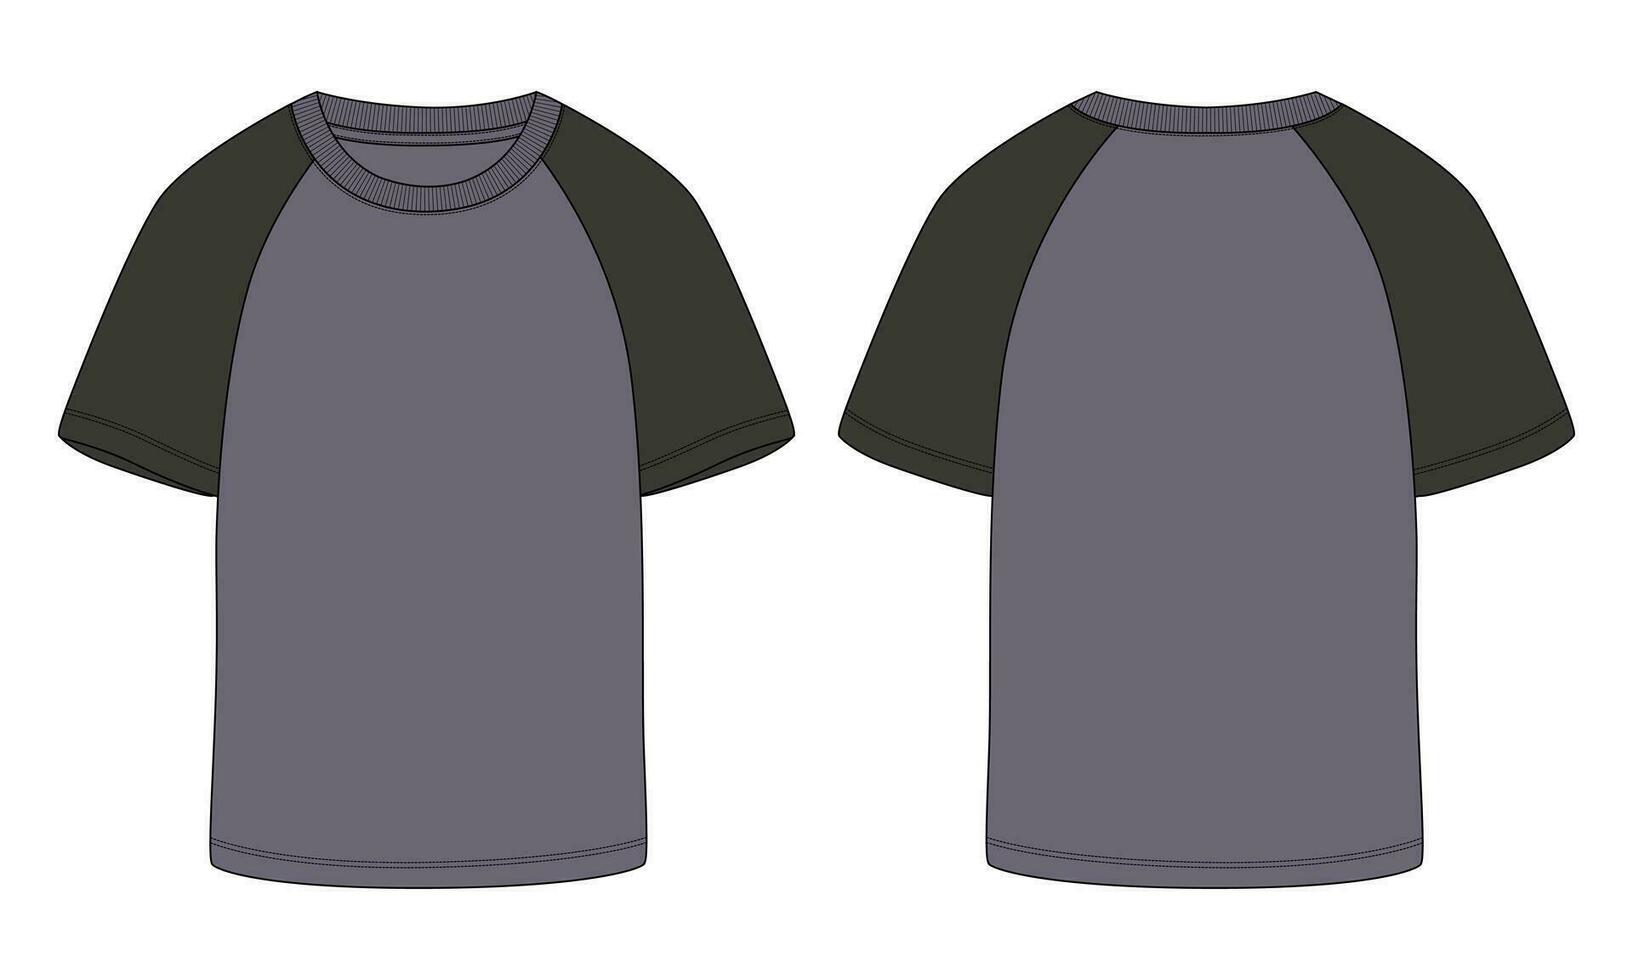 kurzärmliges raglan-t-shirt technische mode flache skizzenvektorillustrationsschablonenvorder-, rückansichten vektor